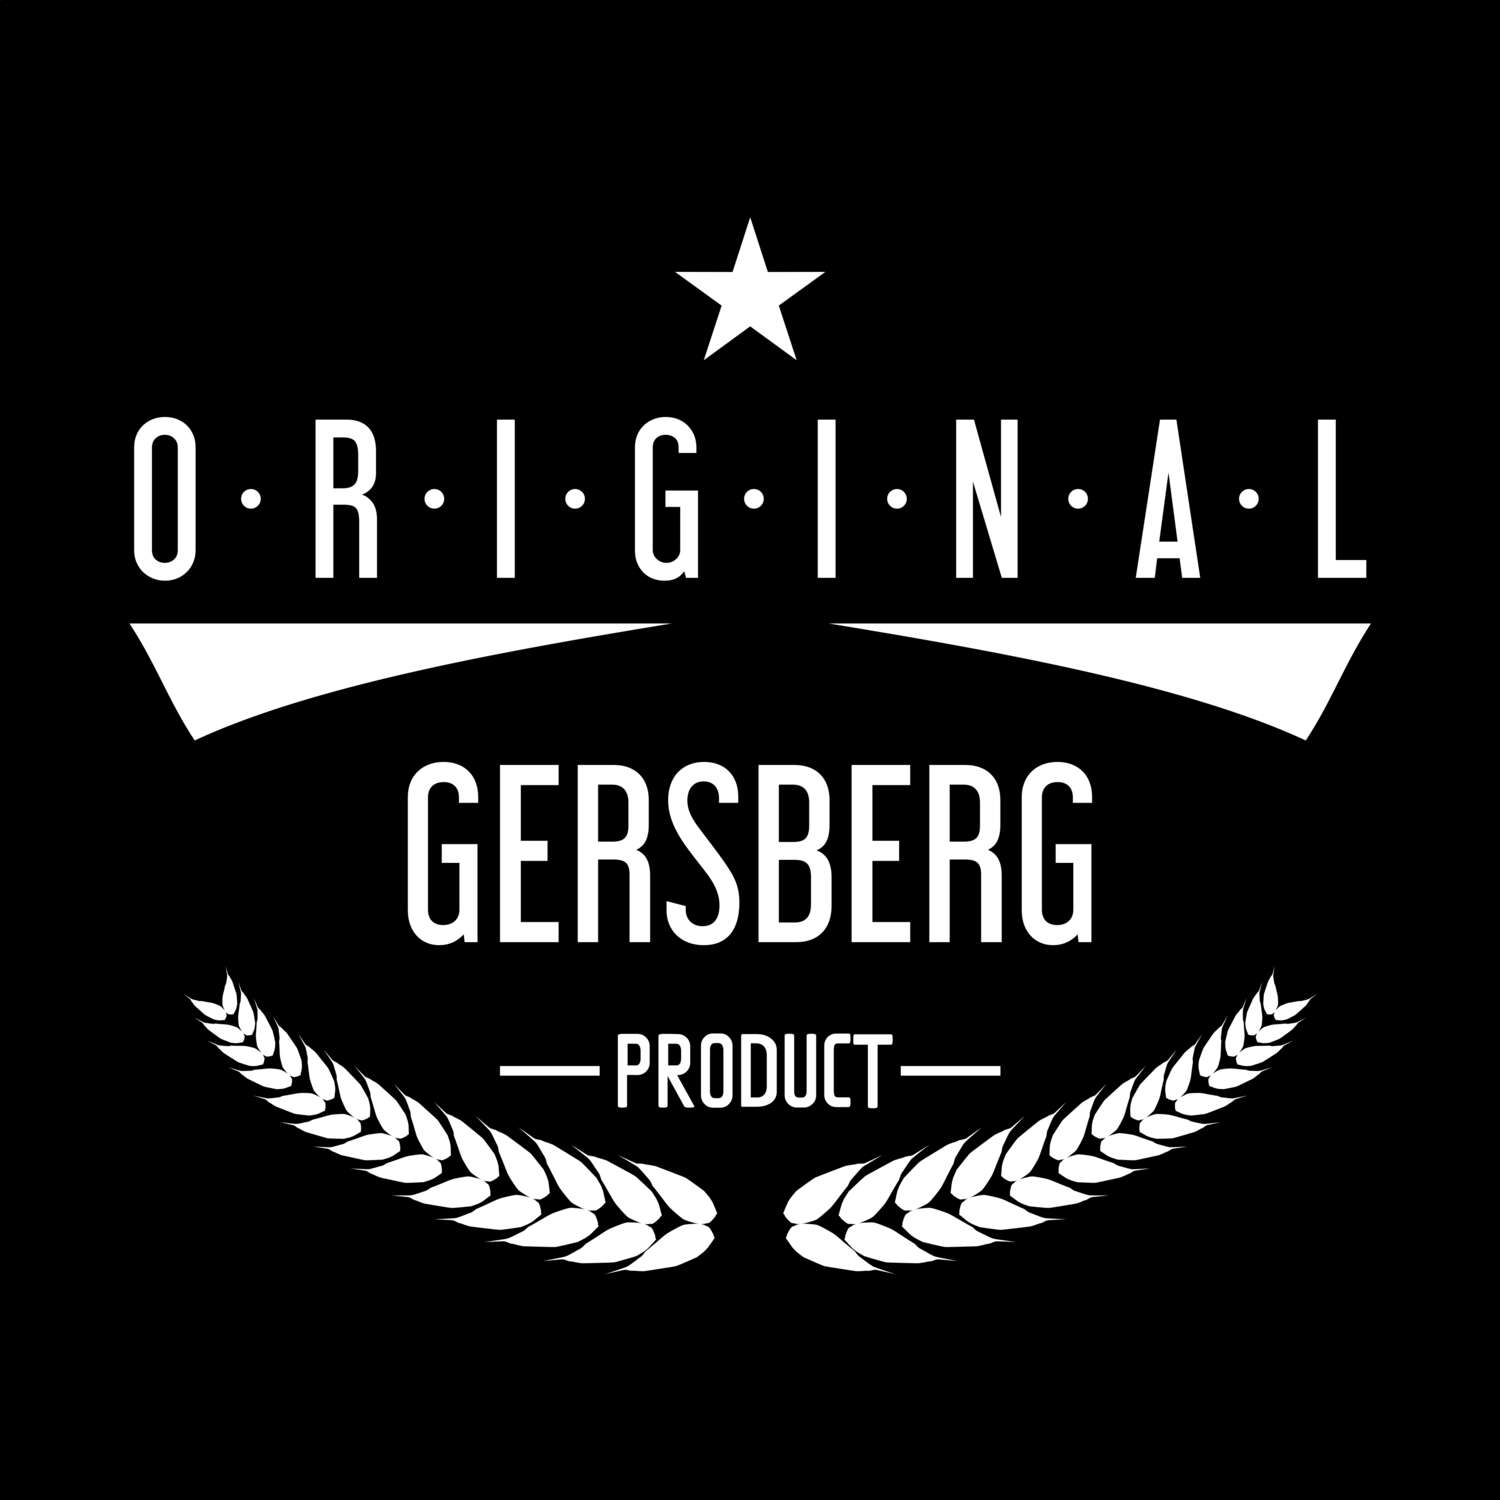 Gersberg T-Shirt »Original Product«